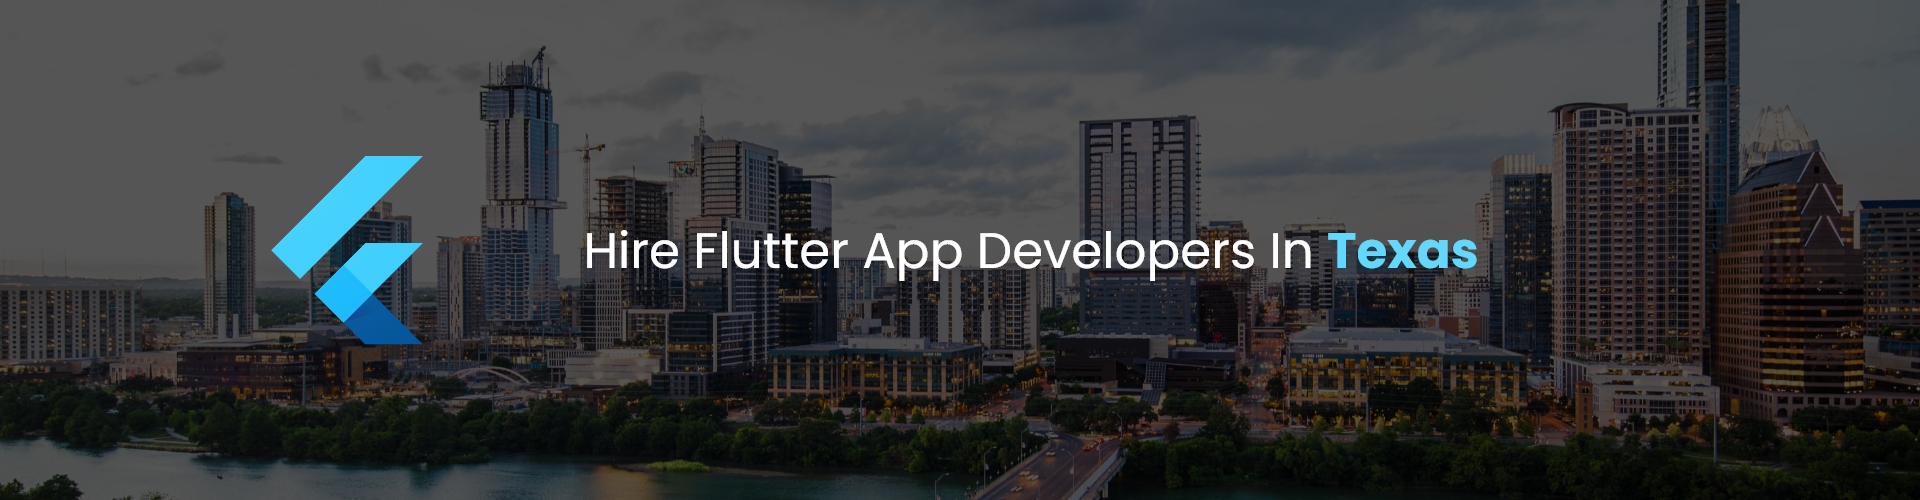 flutter app developers in texas 1